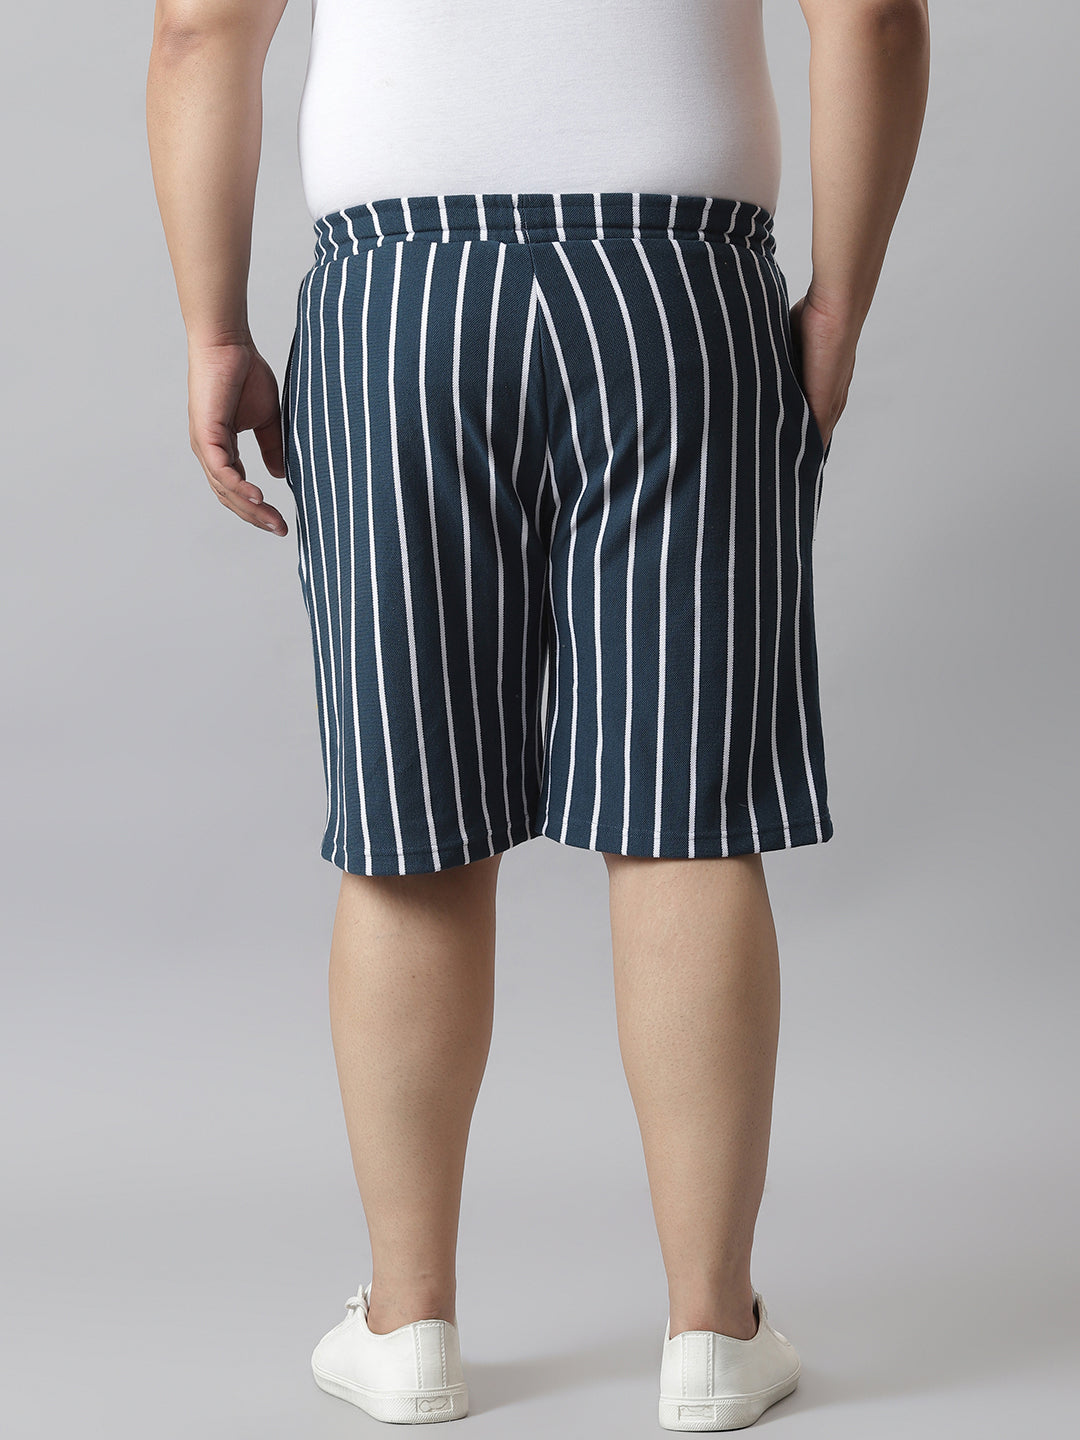 Striped Stylish Shorts